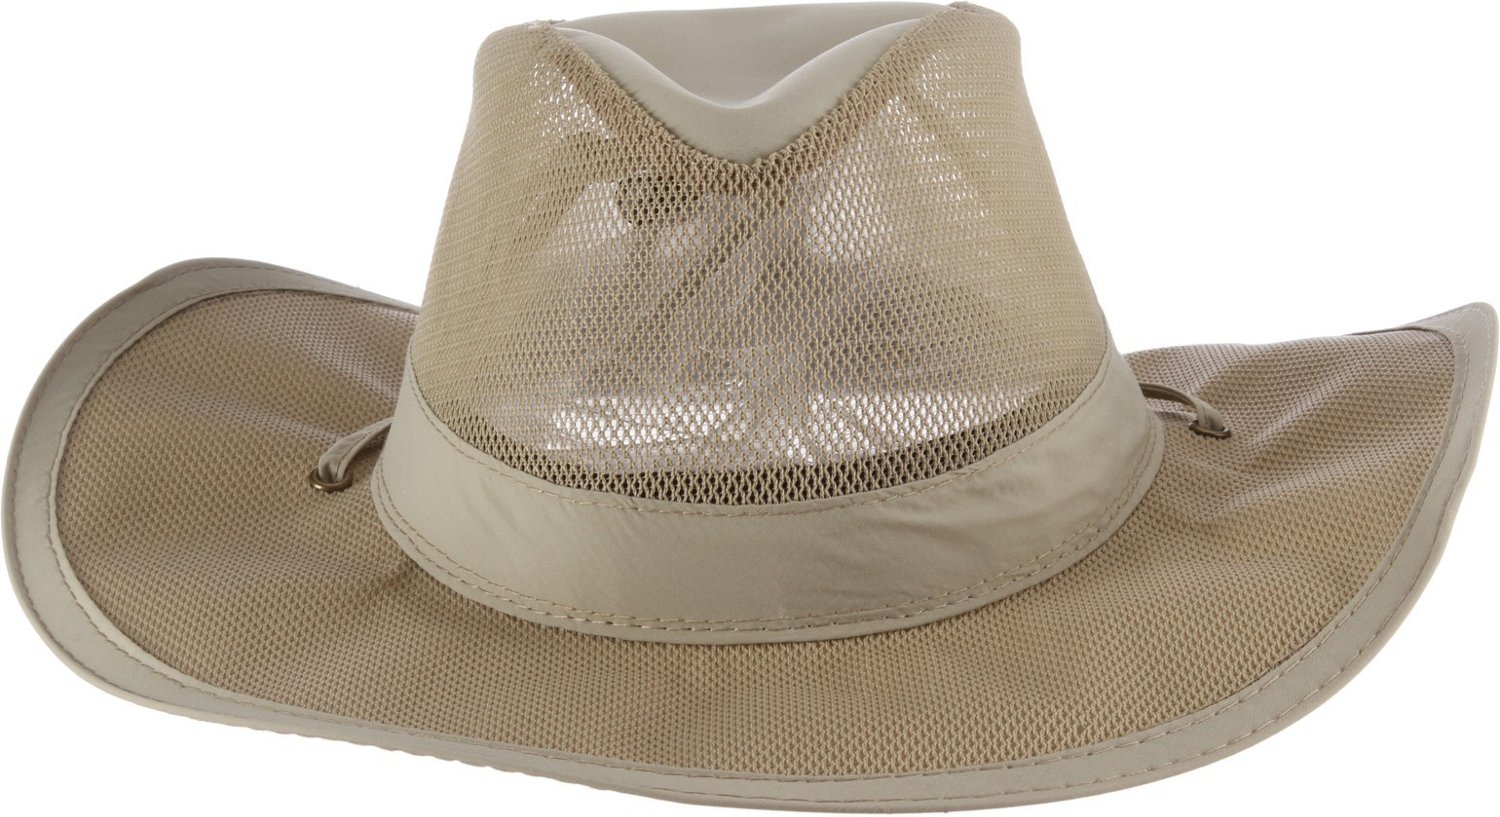 Academy Sports + Outdoors Magellan Outdoors Men's Supplex Mesh Safari Hat